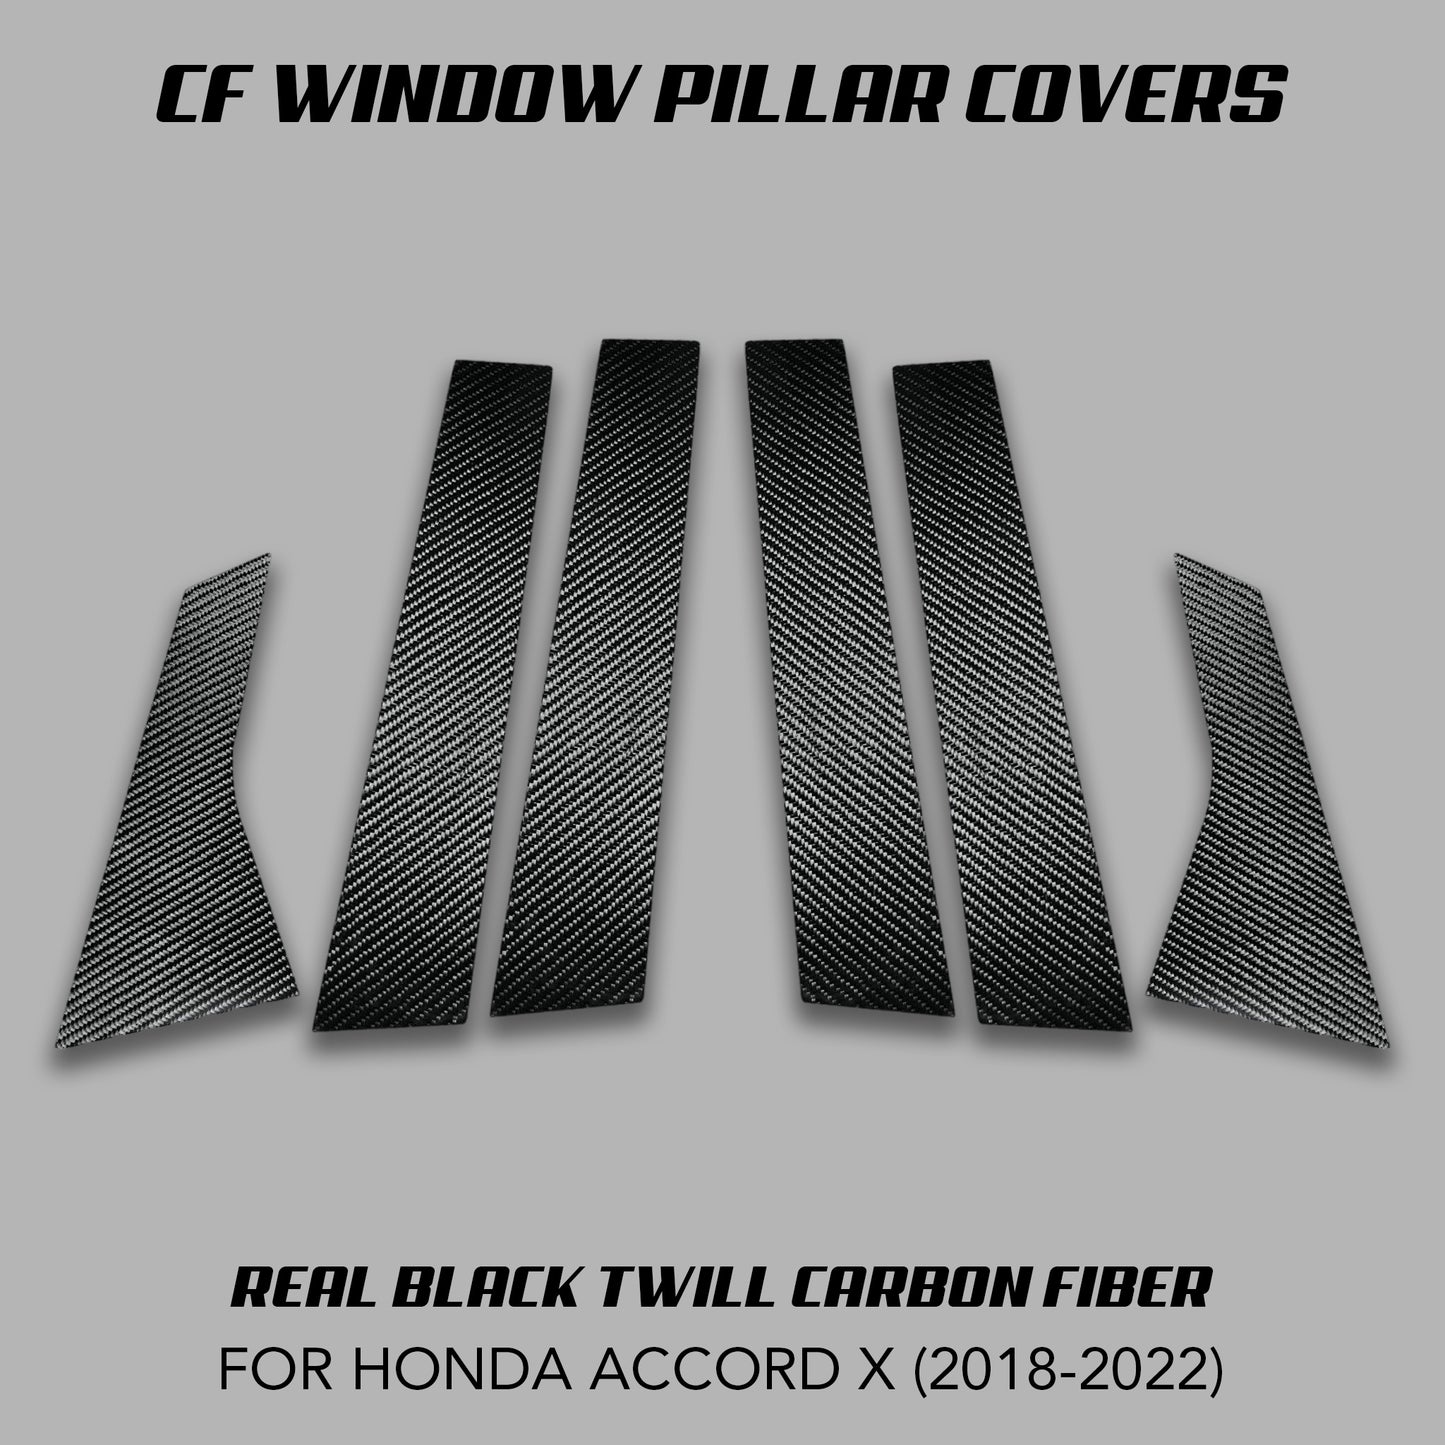 [ACCORD X] REAL CARBON FIBER WINDOW PILLAR COVERS